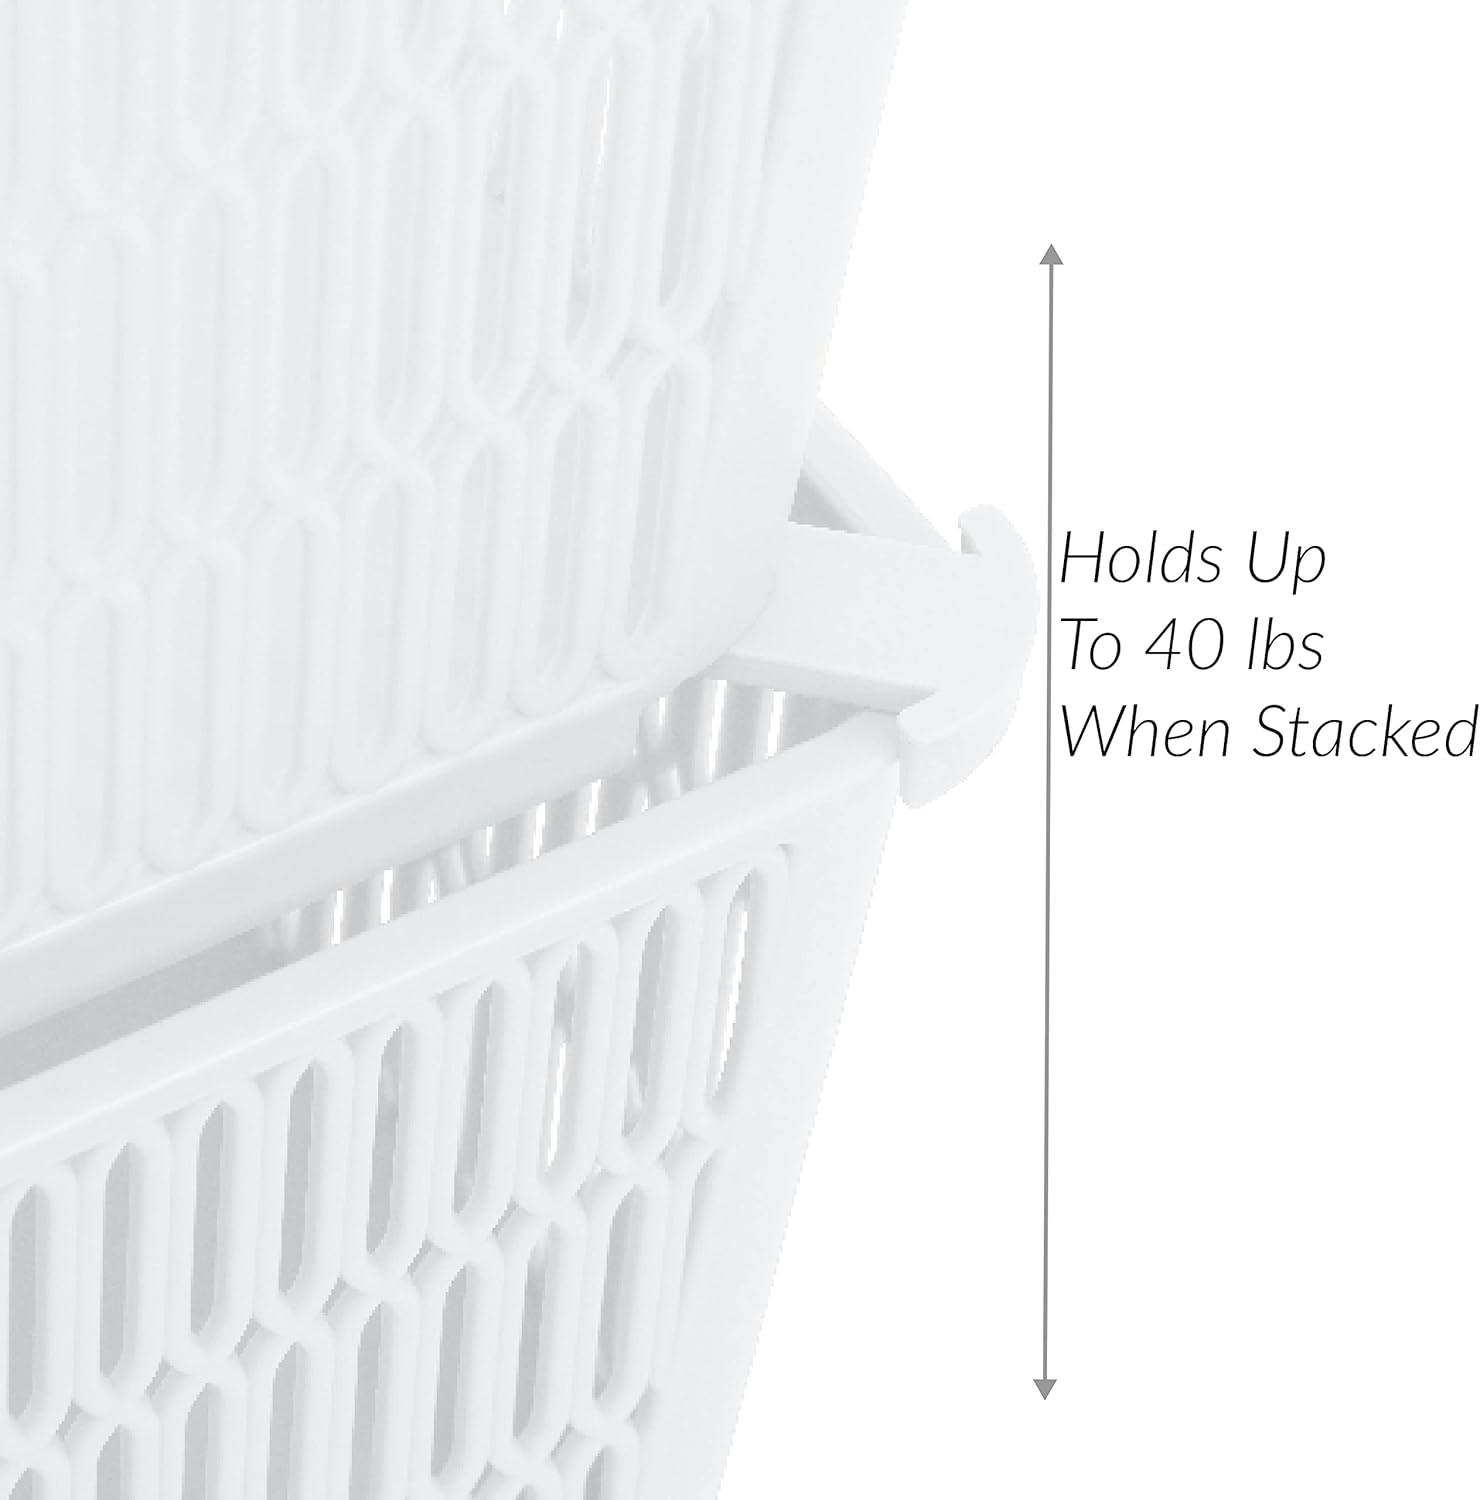 MaxSpace White Slide & Stack 11" Square Plastic Storage Tote Baskets, 2-Pack